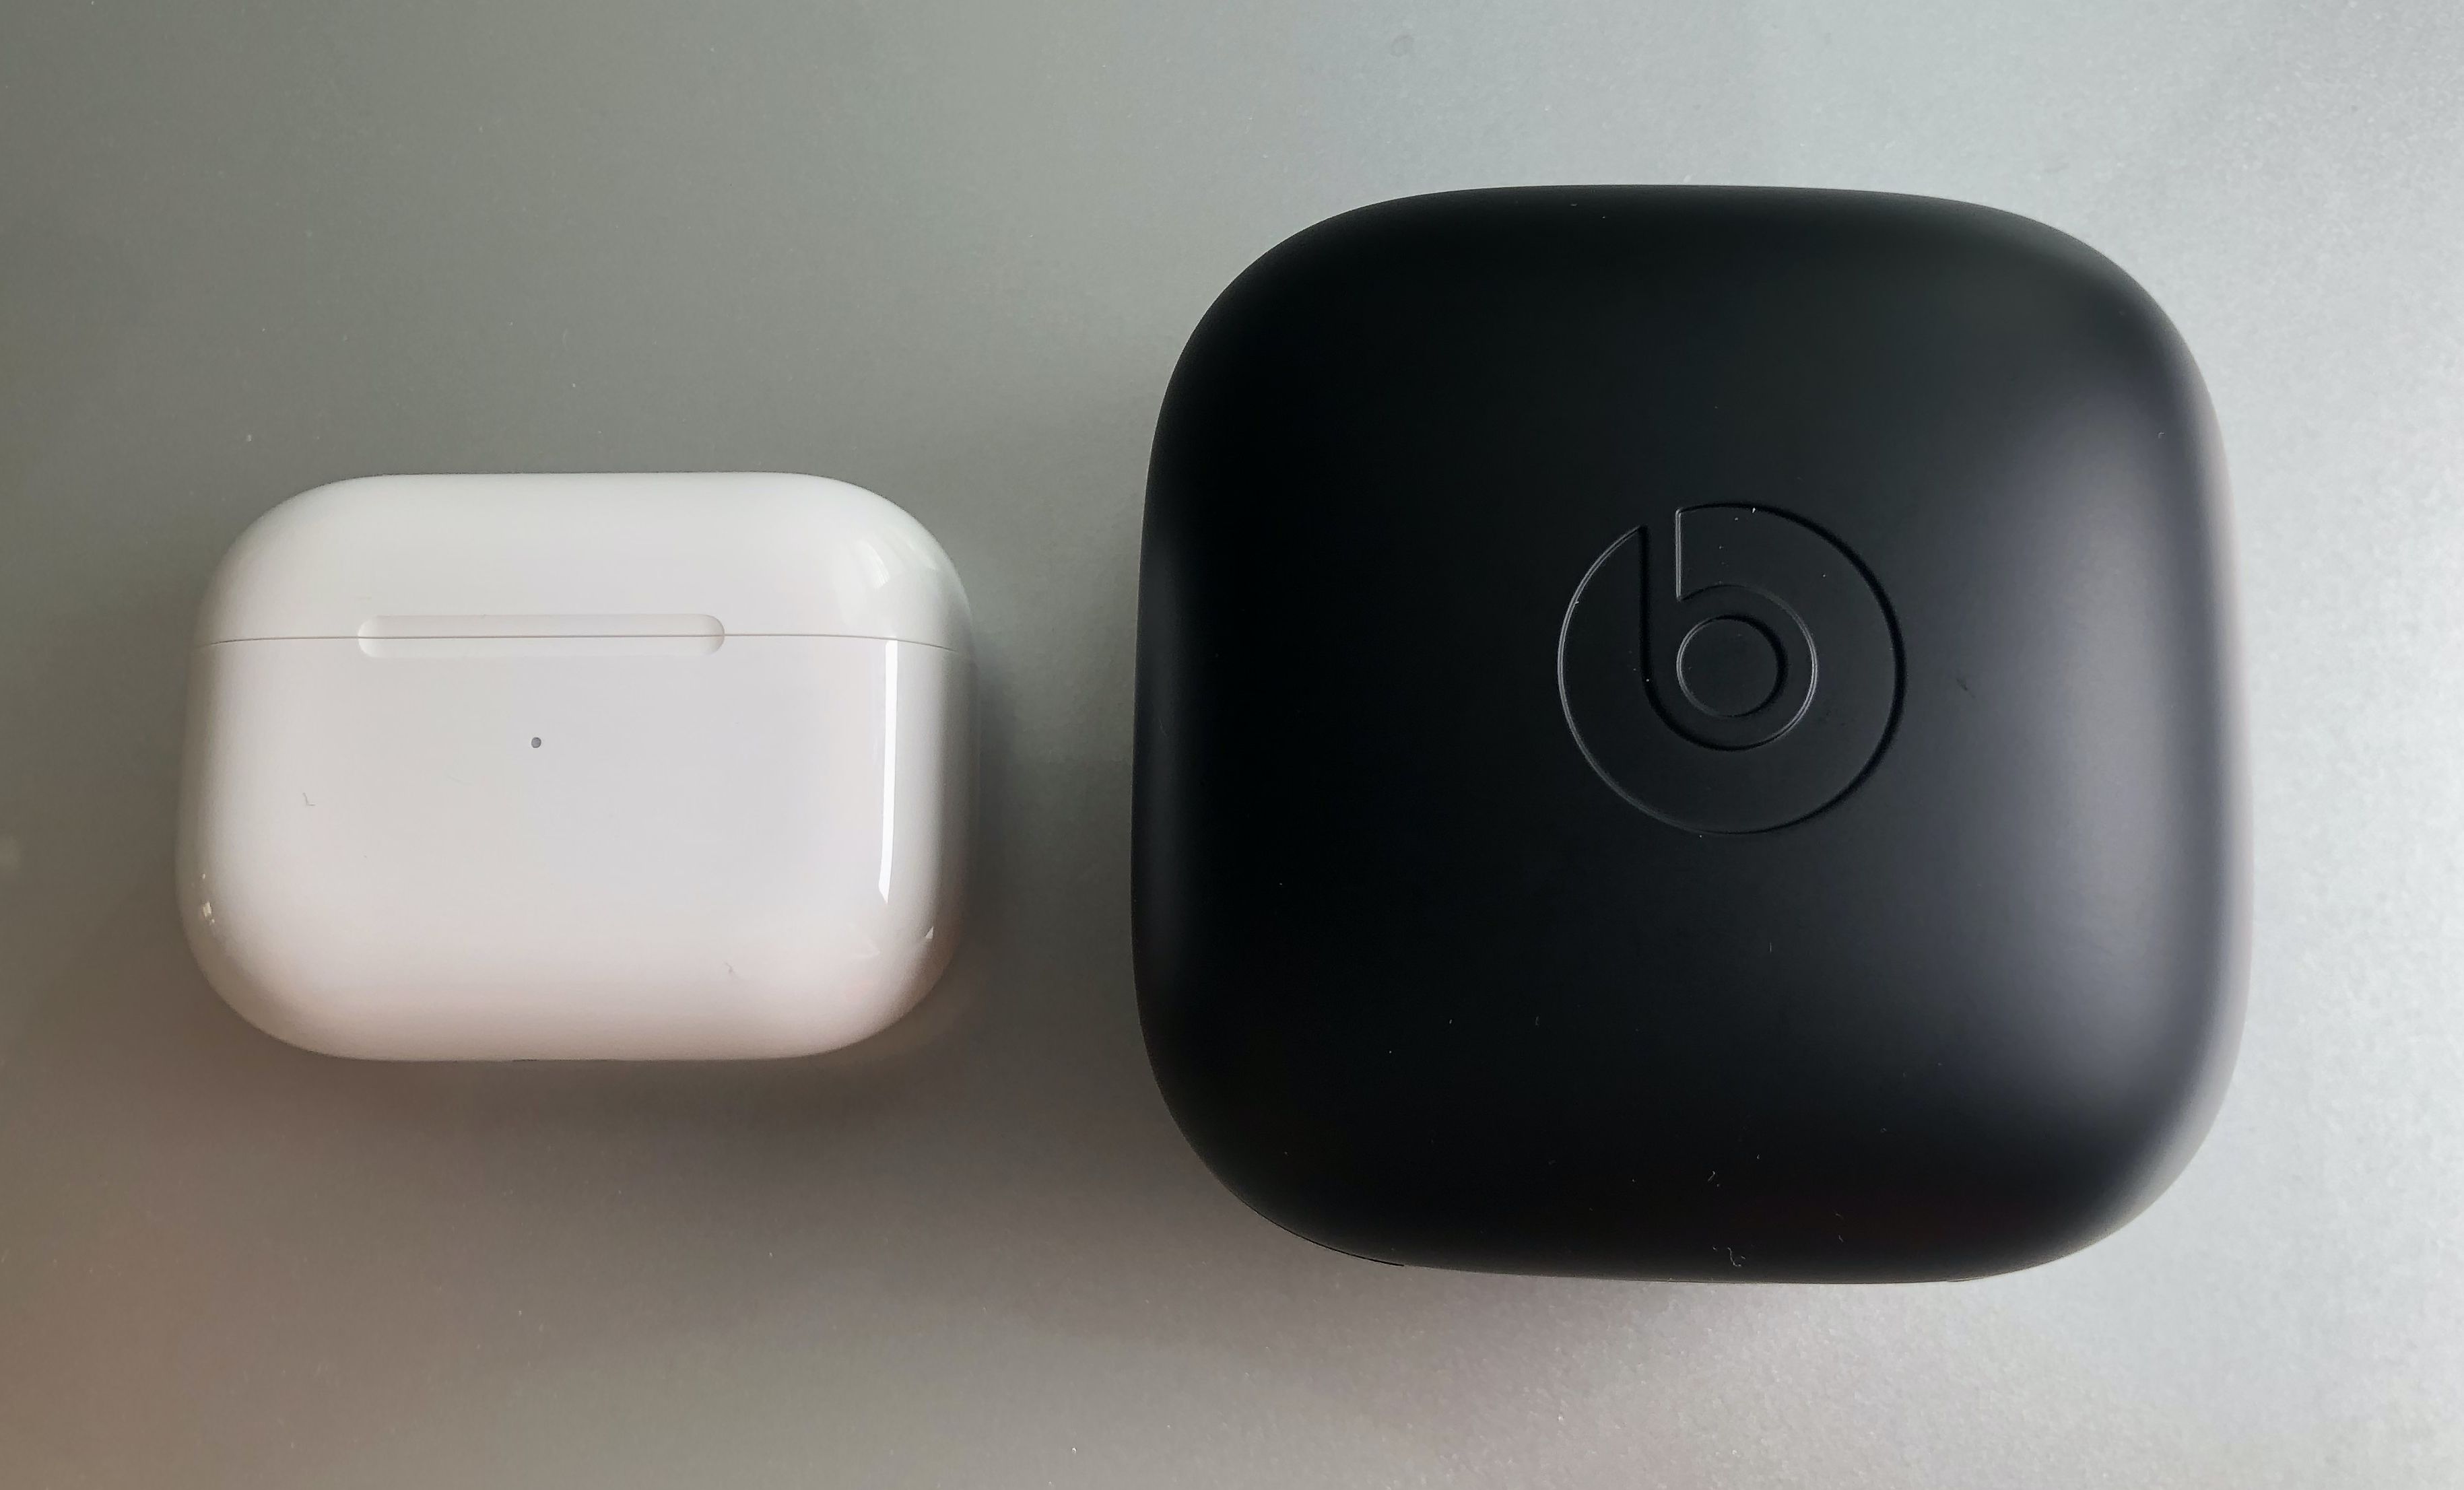 Apple Beats by Dr. Dre Powerbeats Pro Totally Wireless Bluetooth